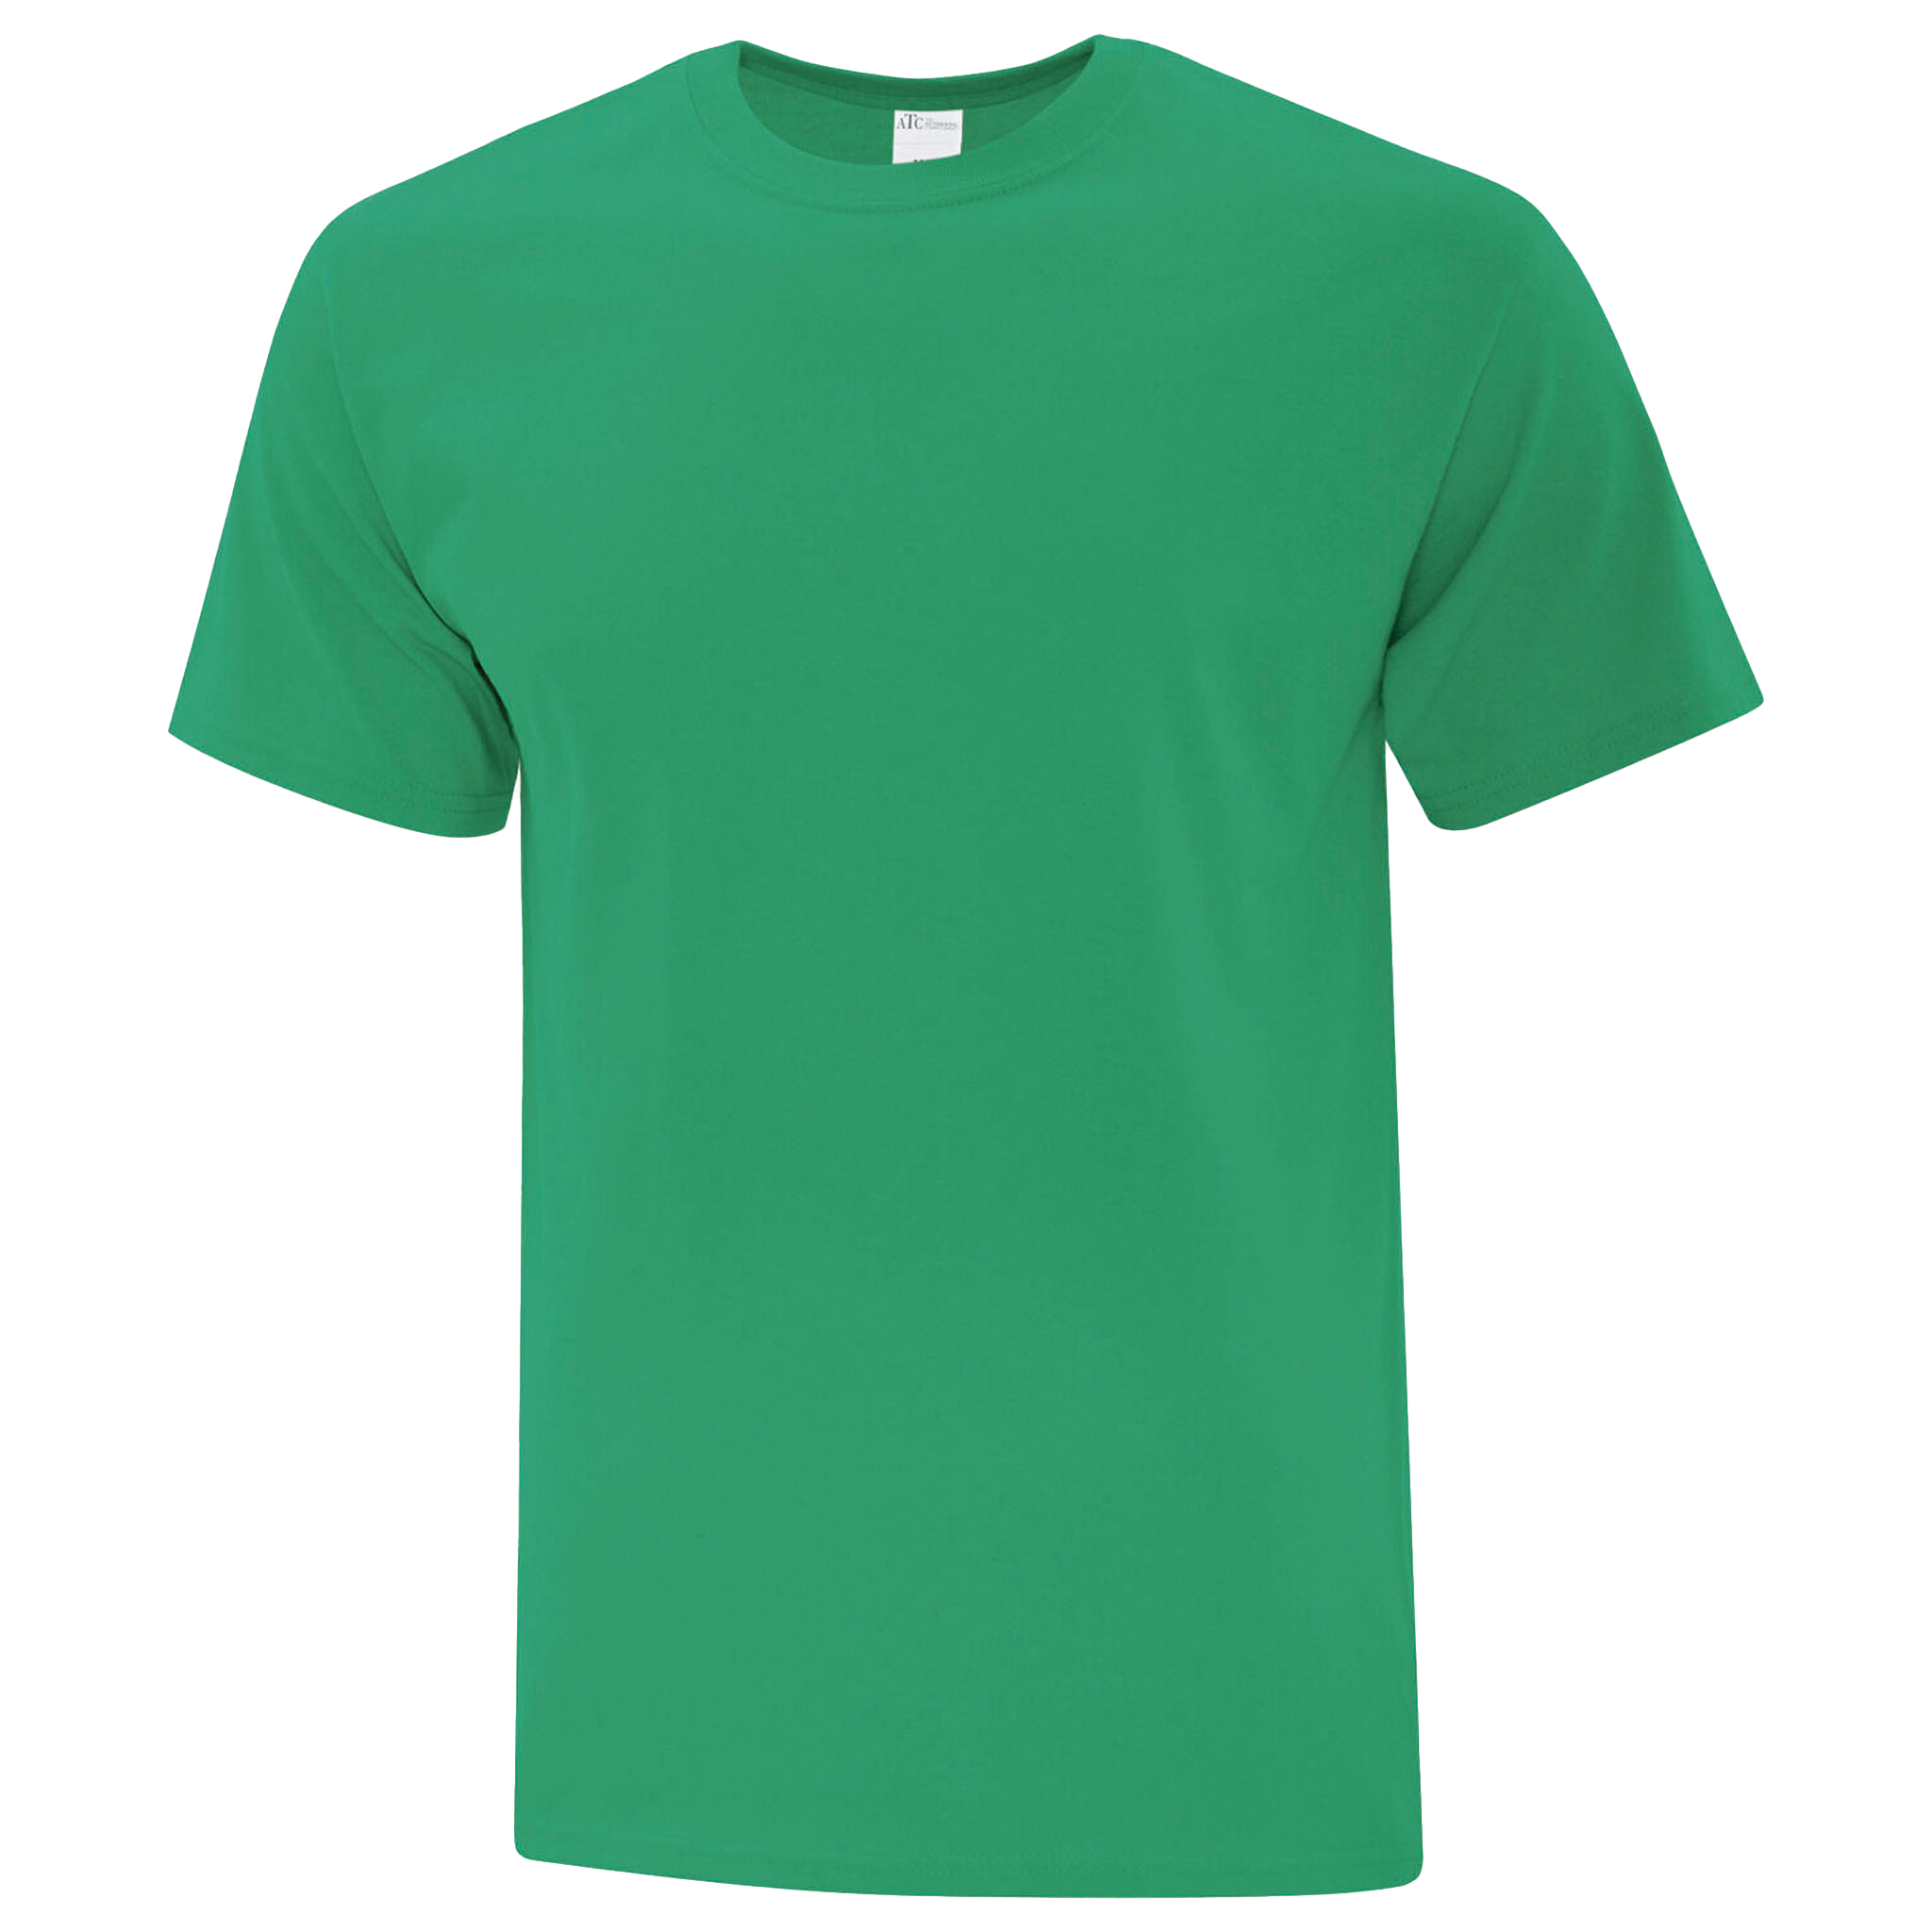 ATC Everyday Cotton T-Shirt - Men's Sizing S-4XL - Green